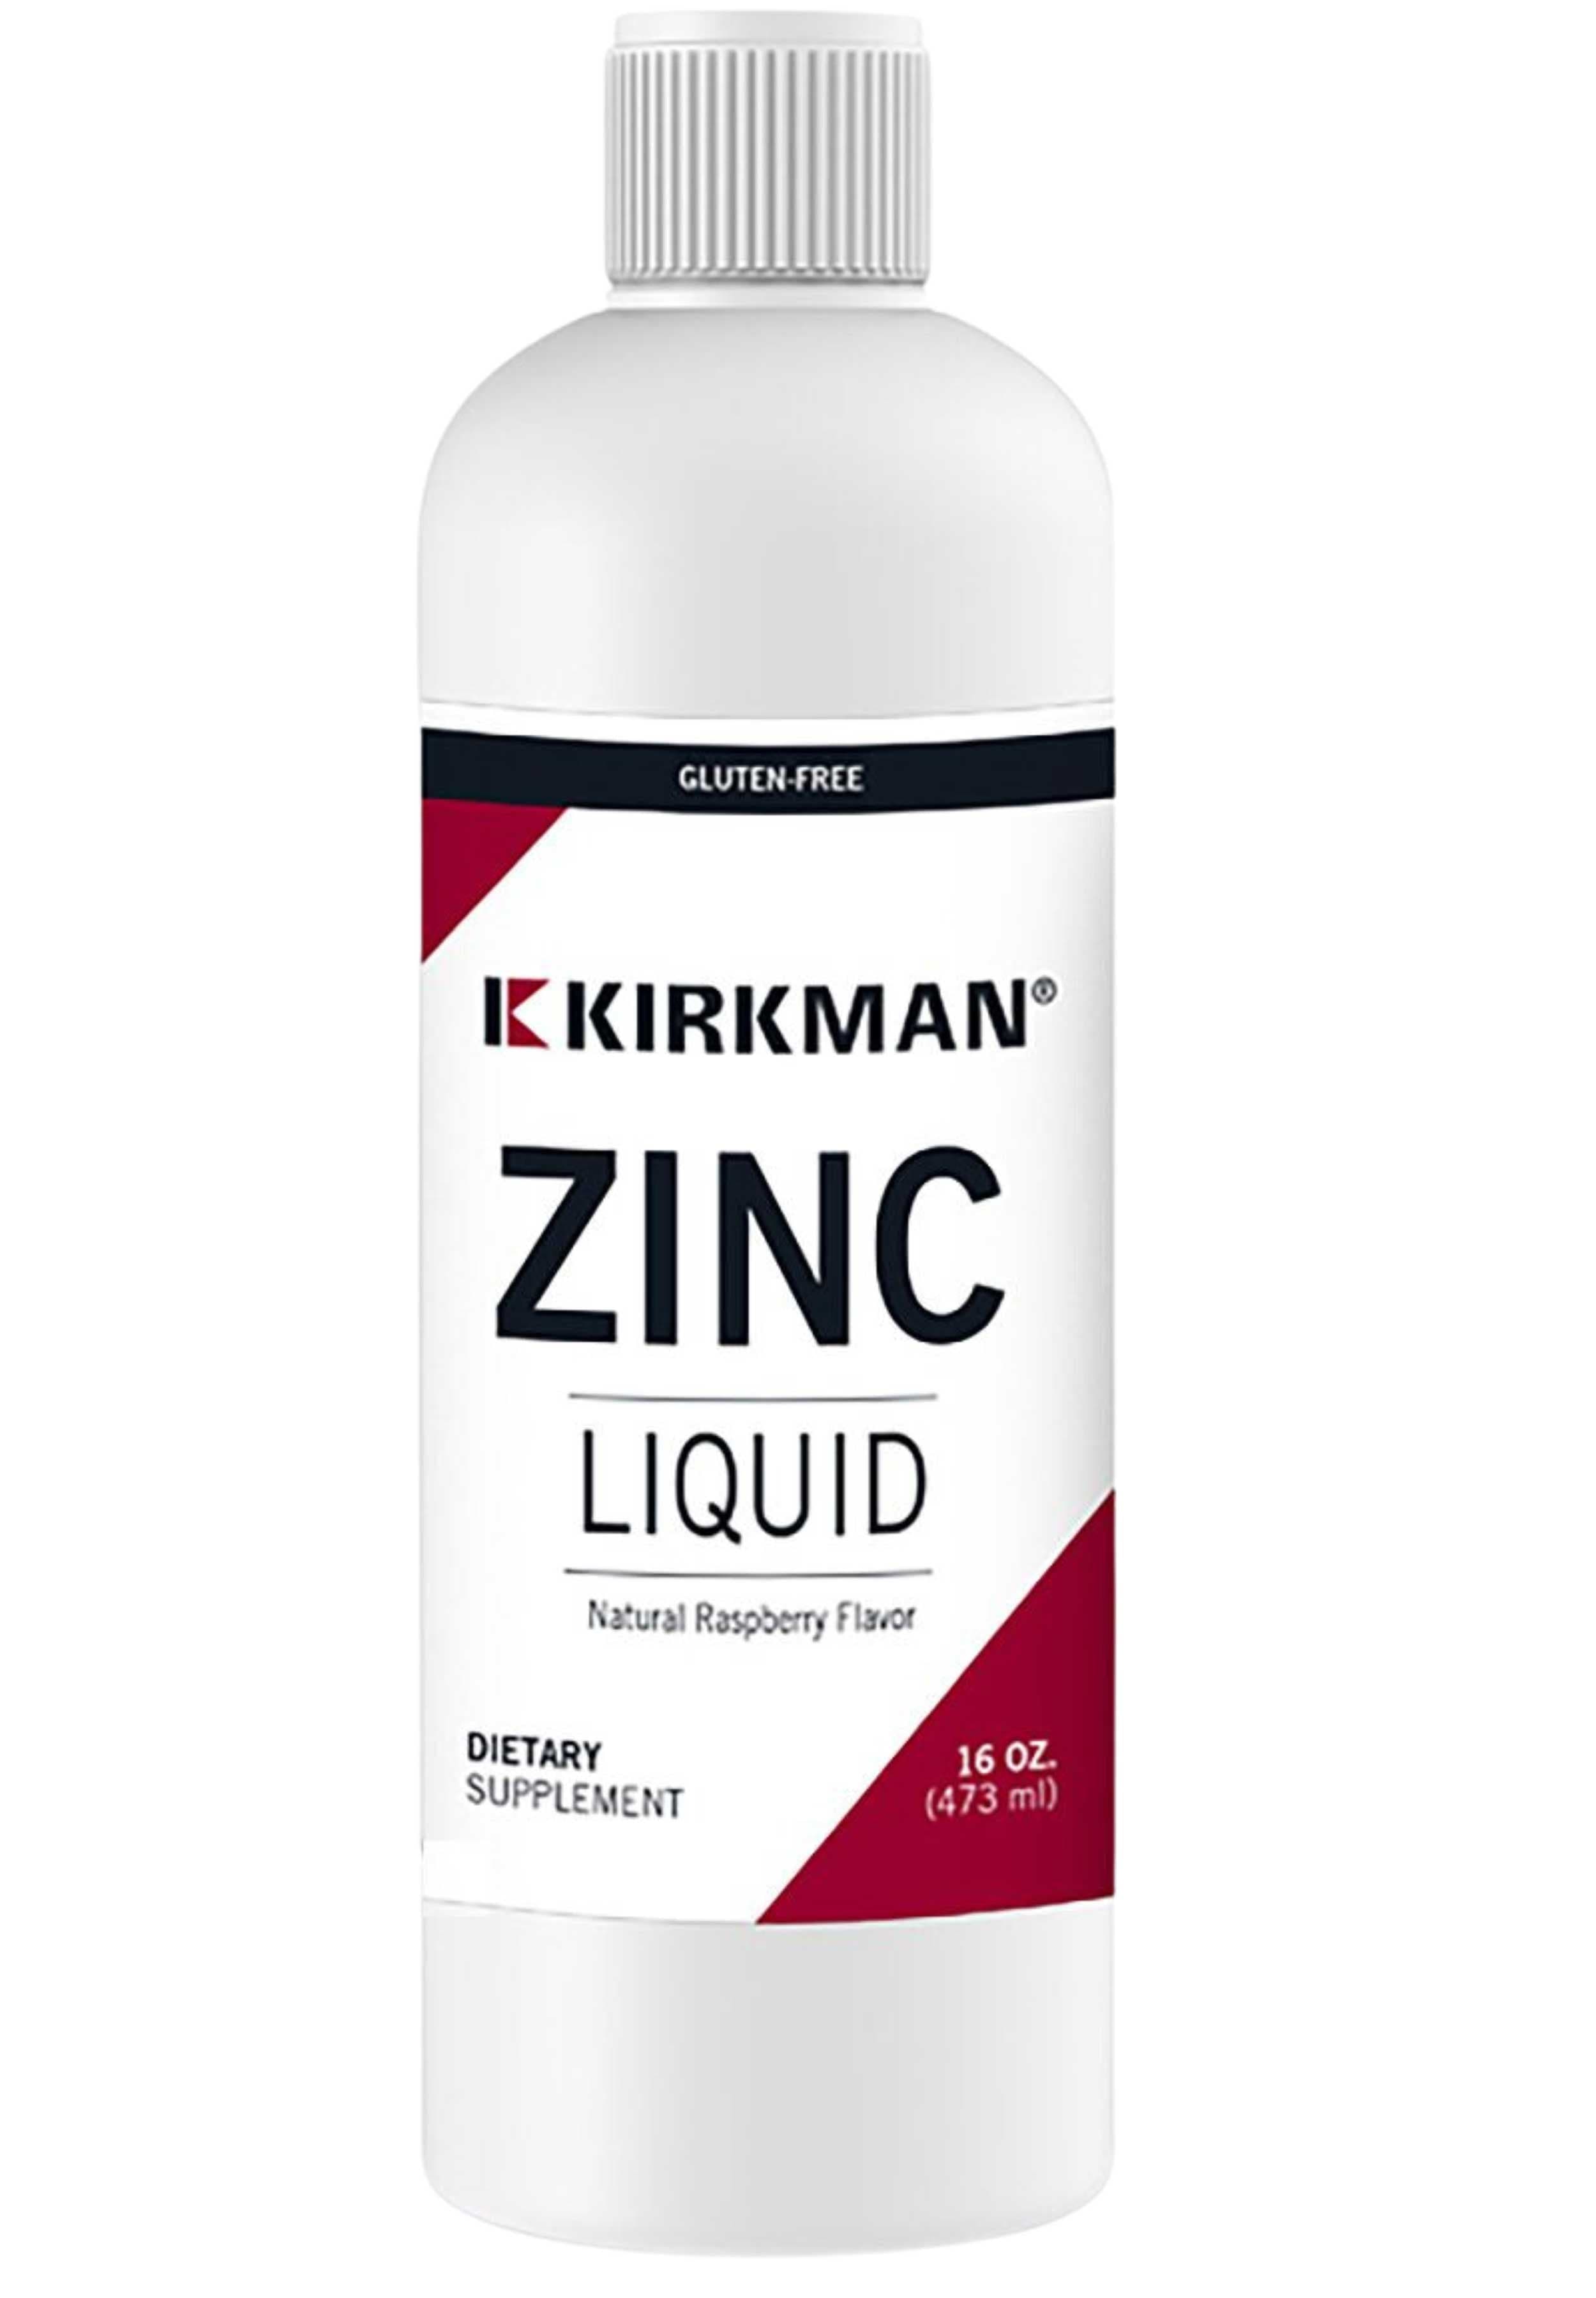 Kirkman Zinc Liquid